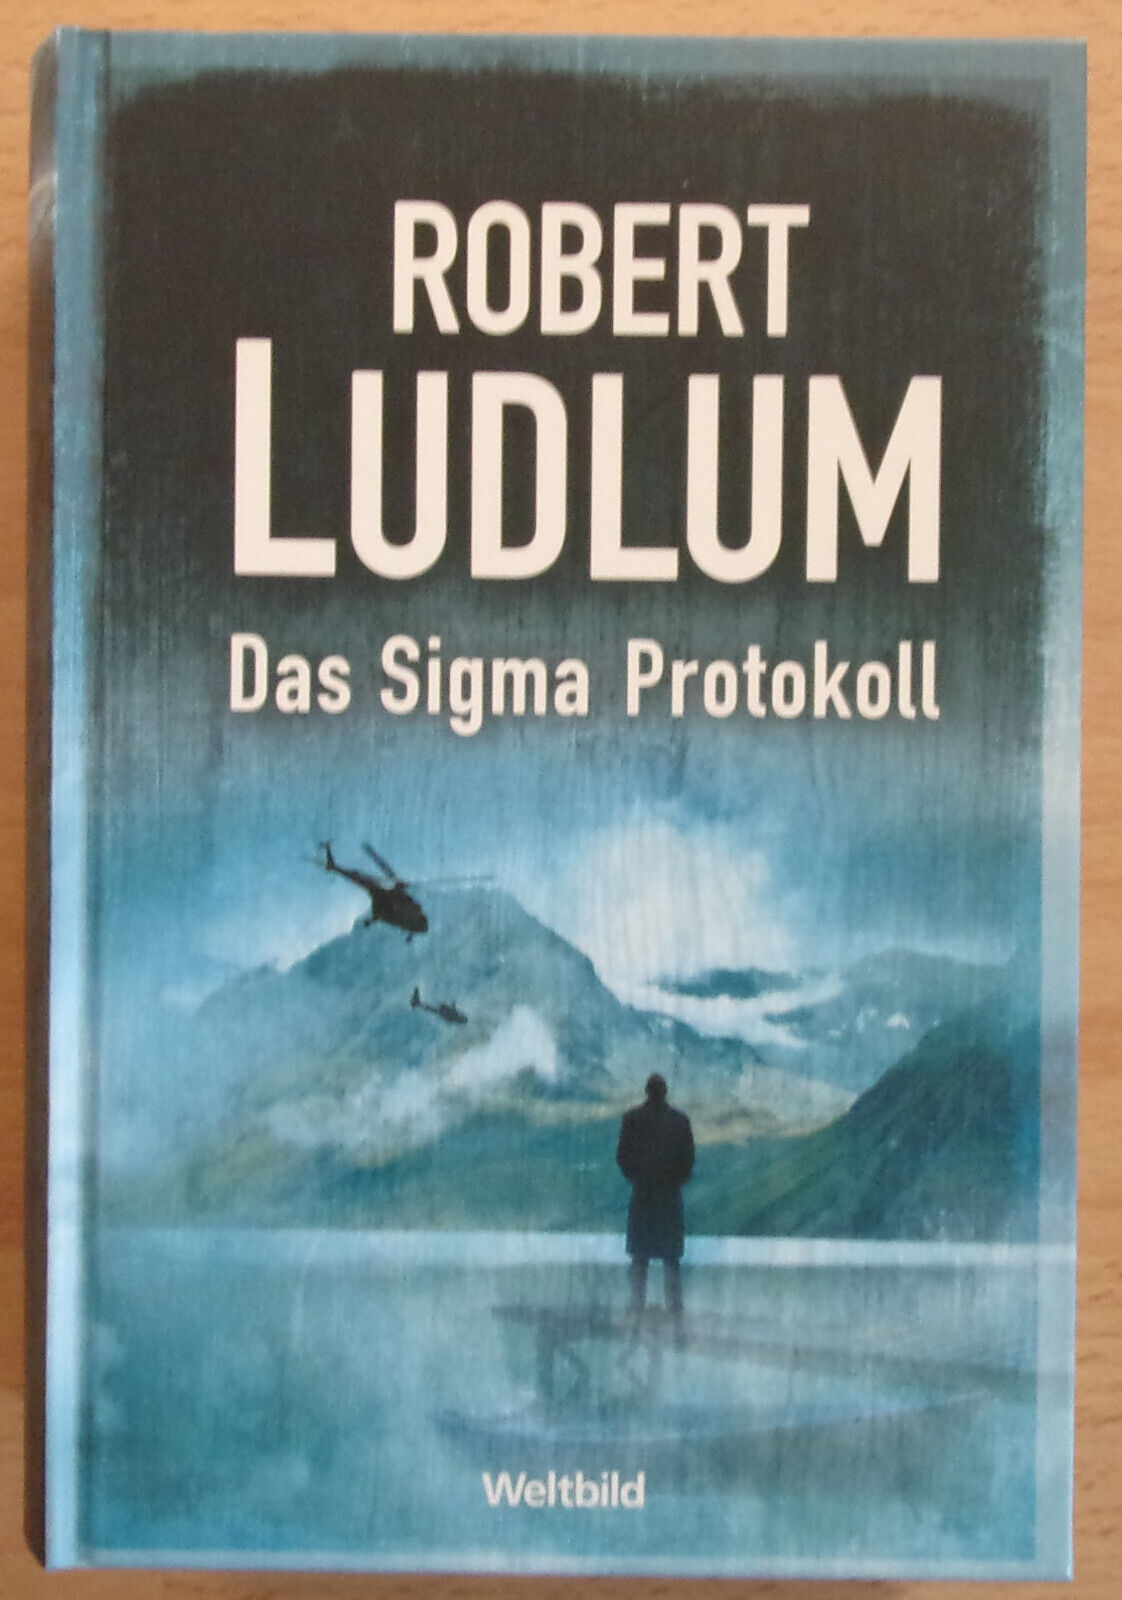 Robert Ludlum - Das Sigma Protokoll - Gebundene Ausgabe - TOP! - Robert Ludlum